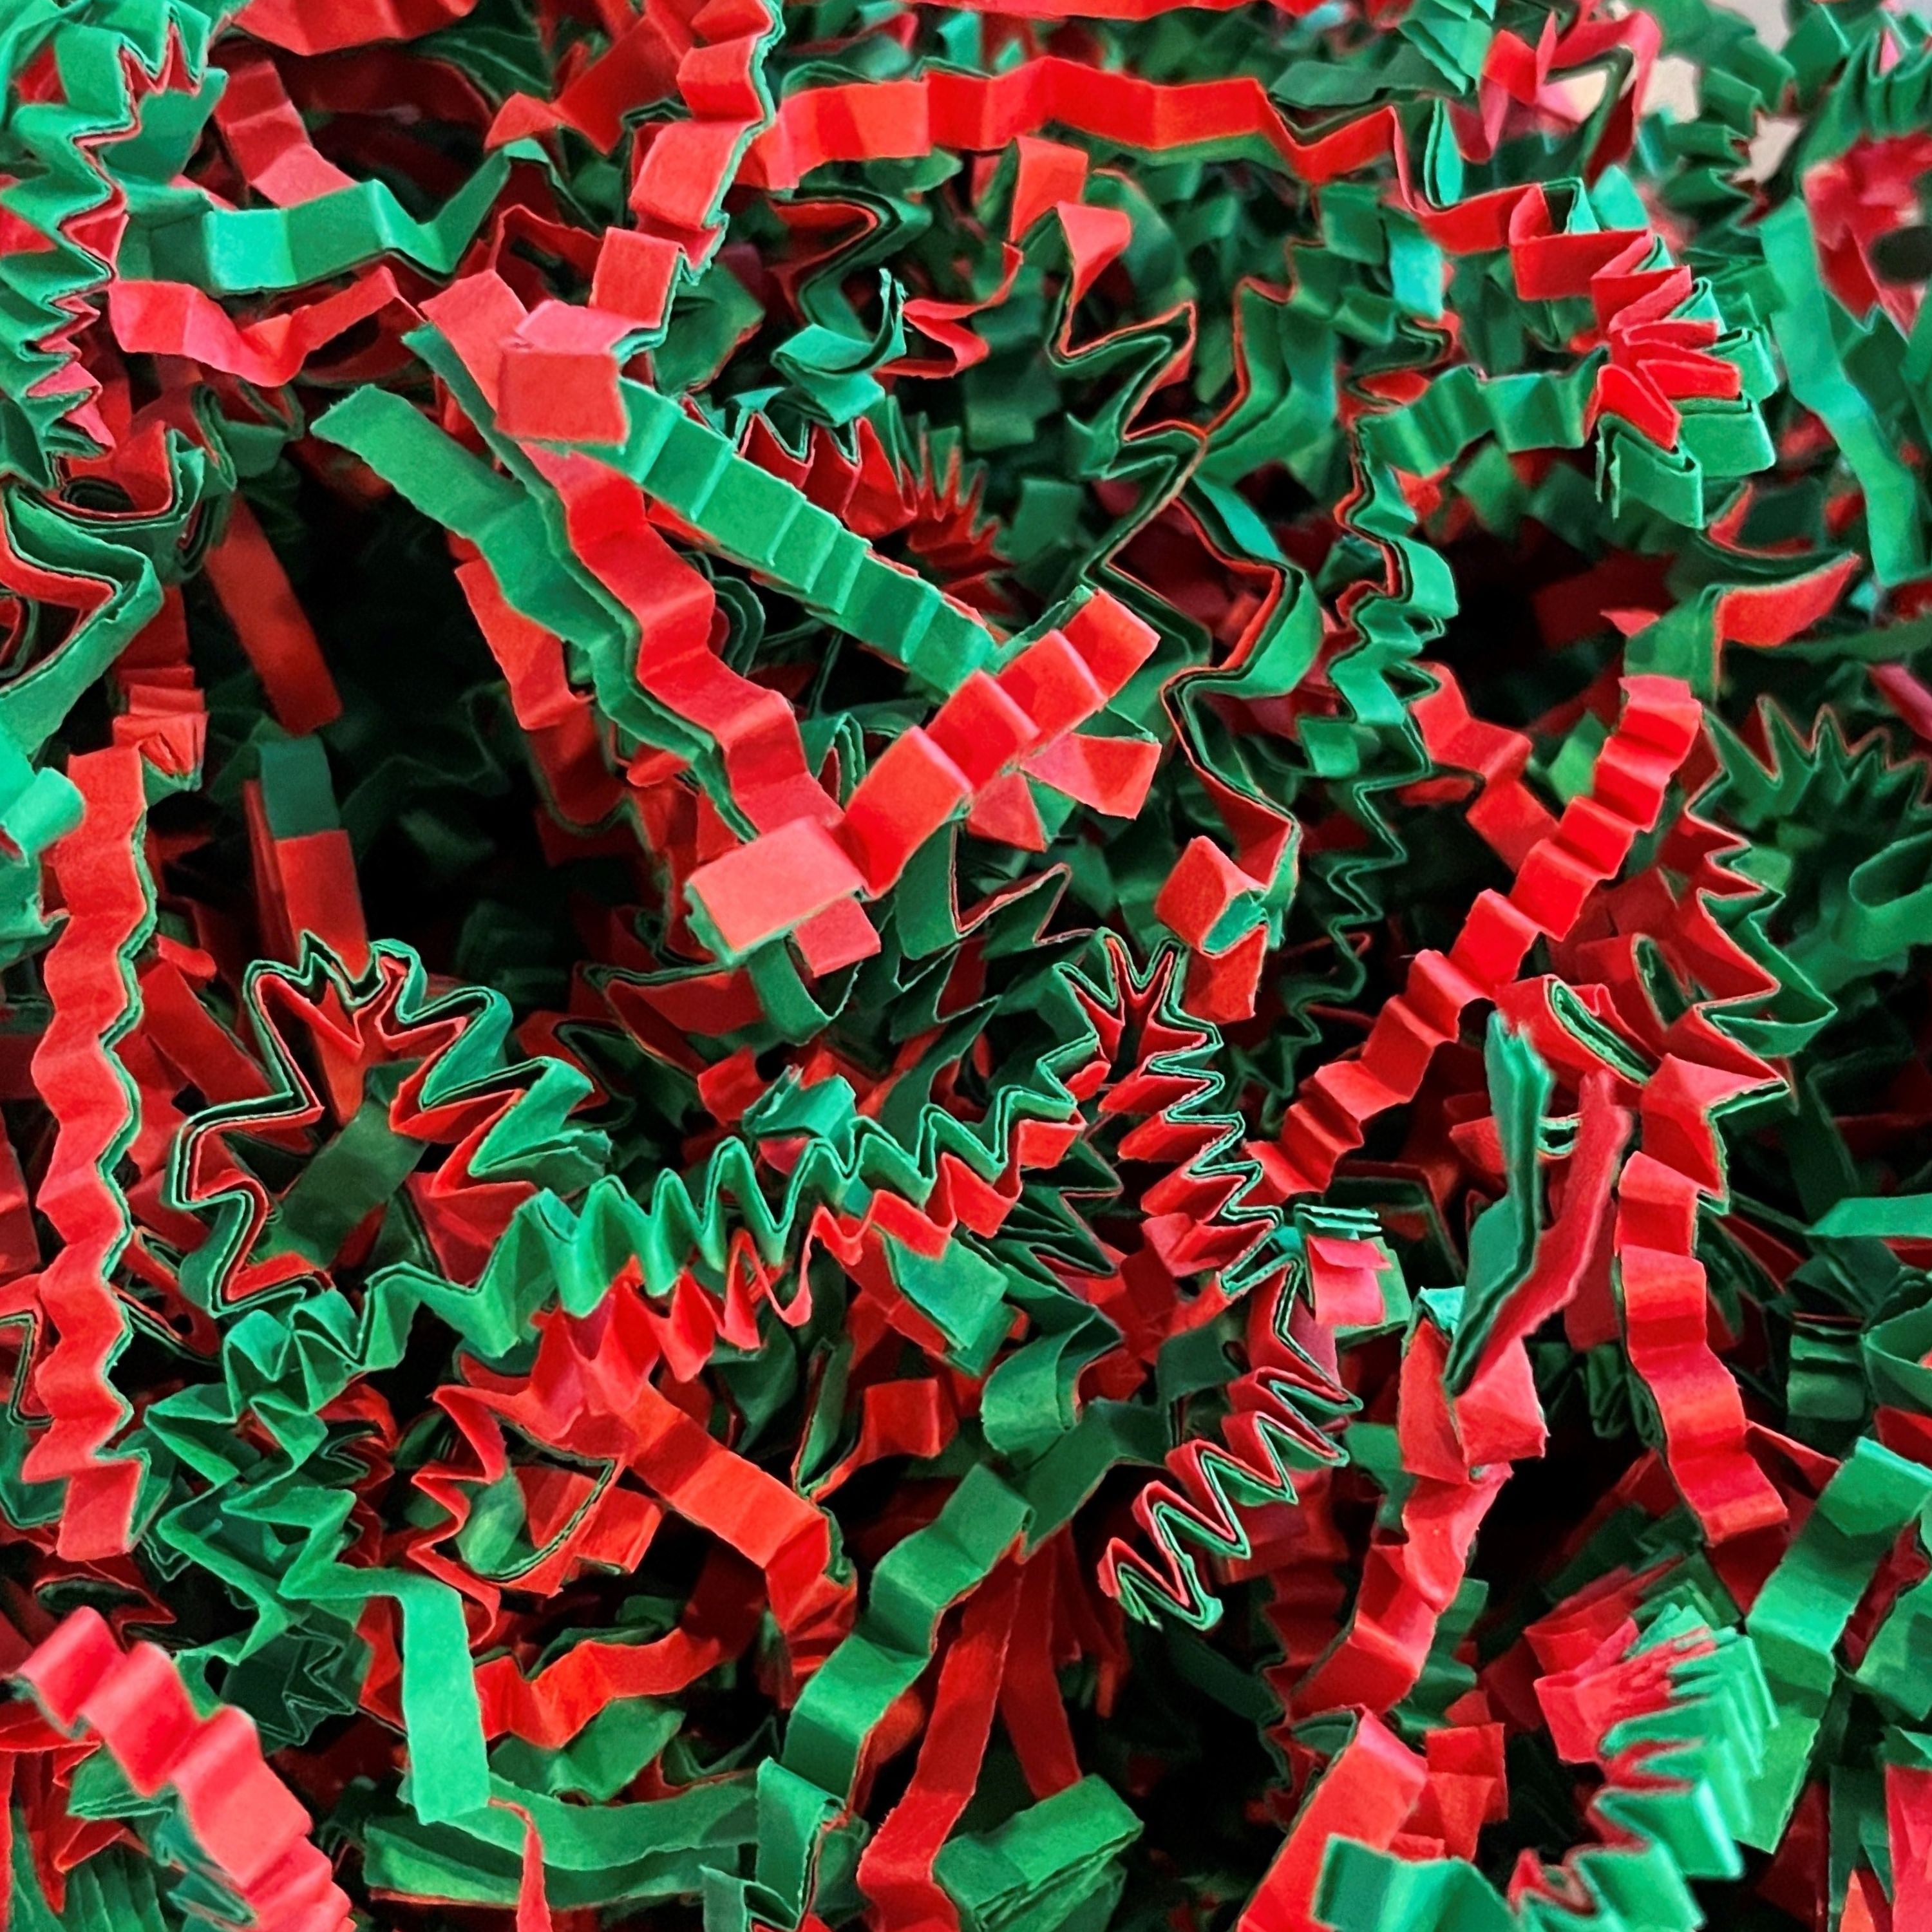 Montplisse Red & Green Crinkle Cut Shredded Paper - 1LB Holiday Shred  Filler for Christmas Gift Baskets and Packaging